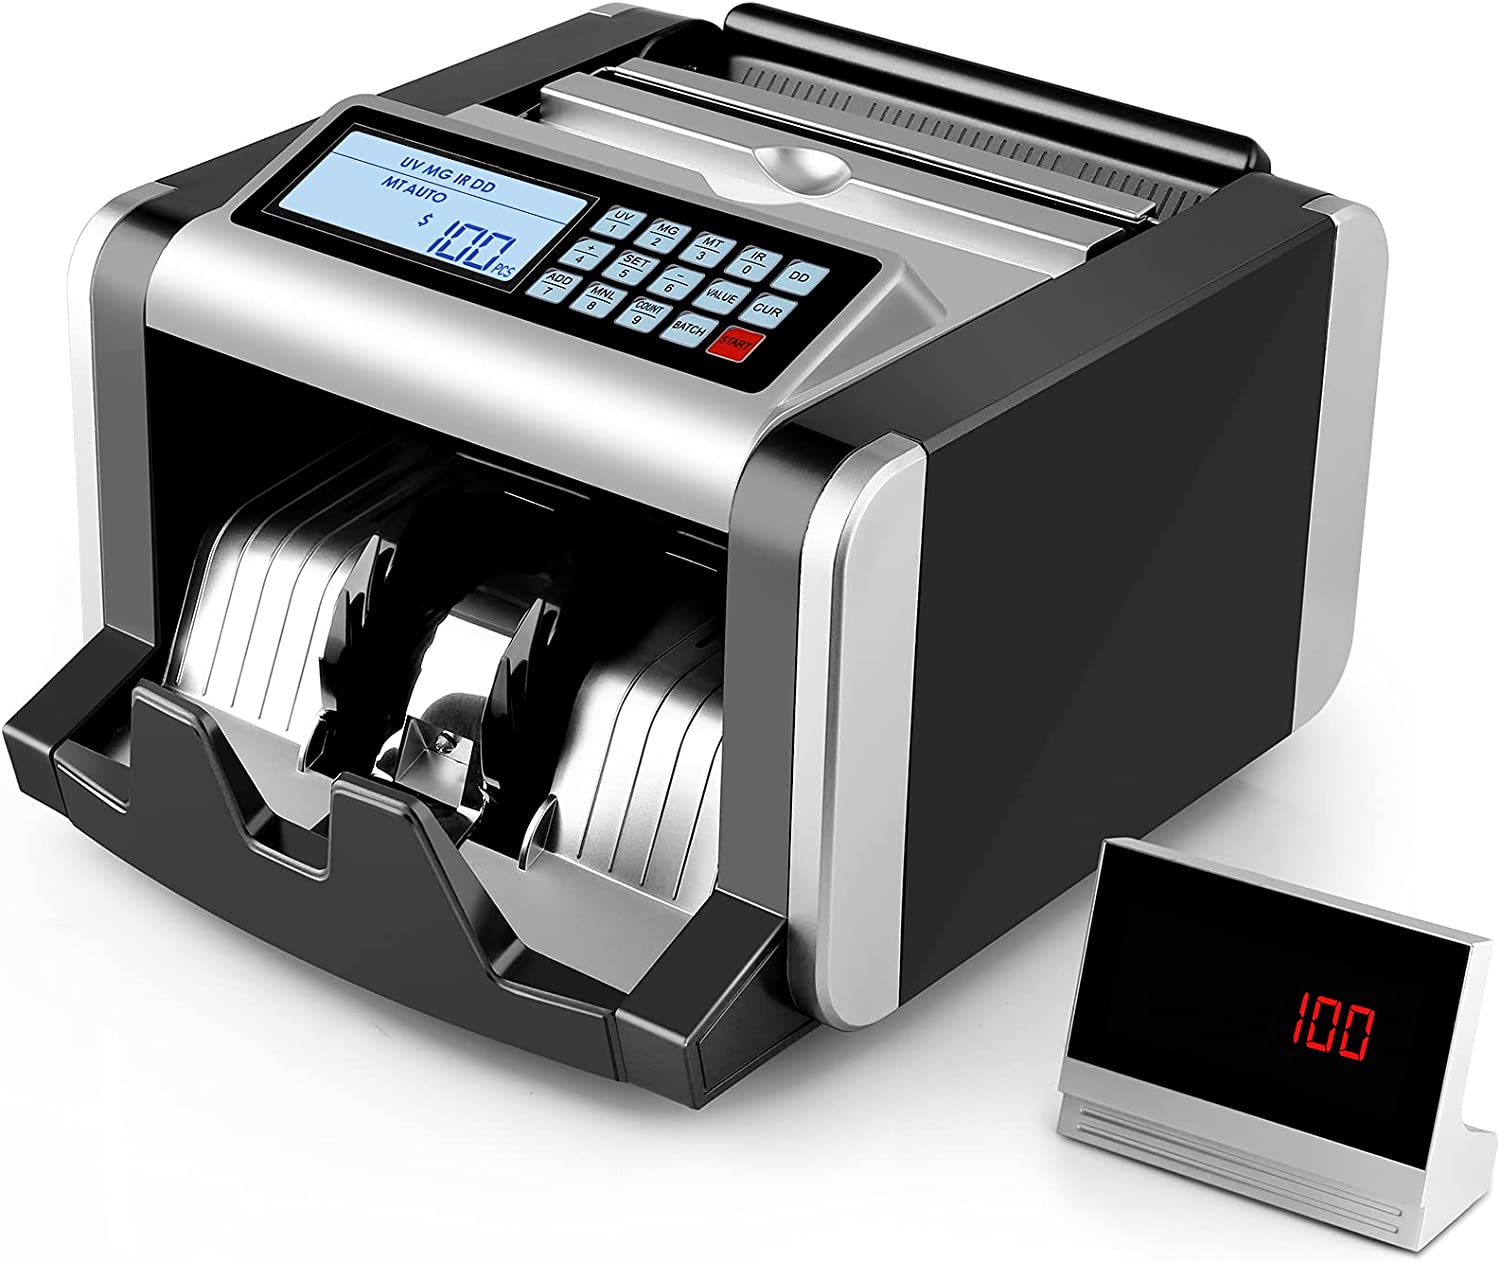 Money Counter Machine with UV/MG/IR Counterfeit [...]